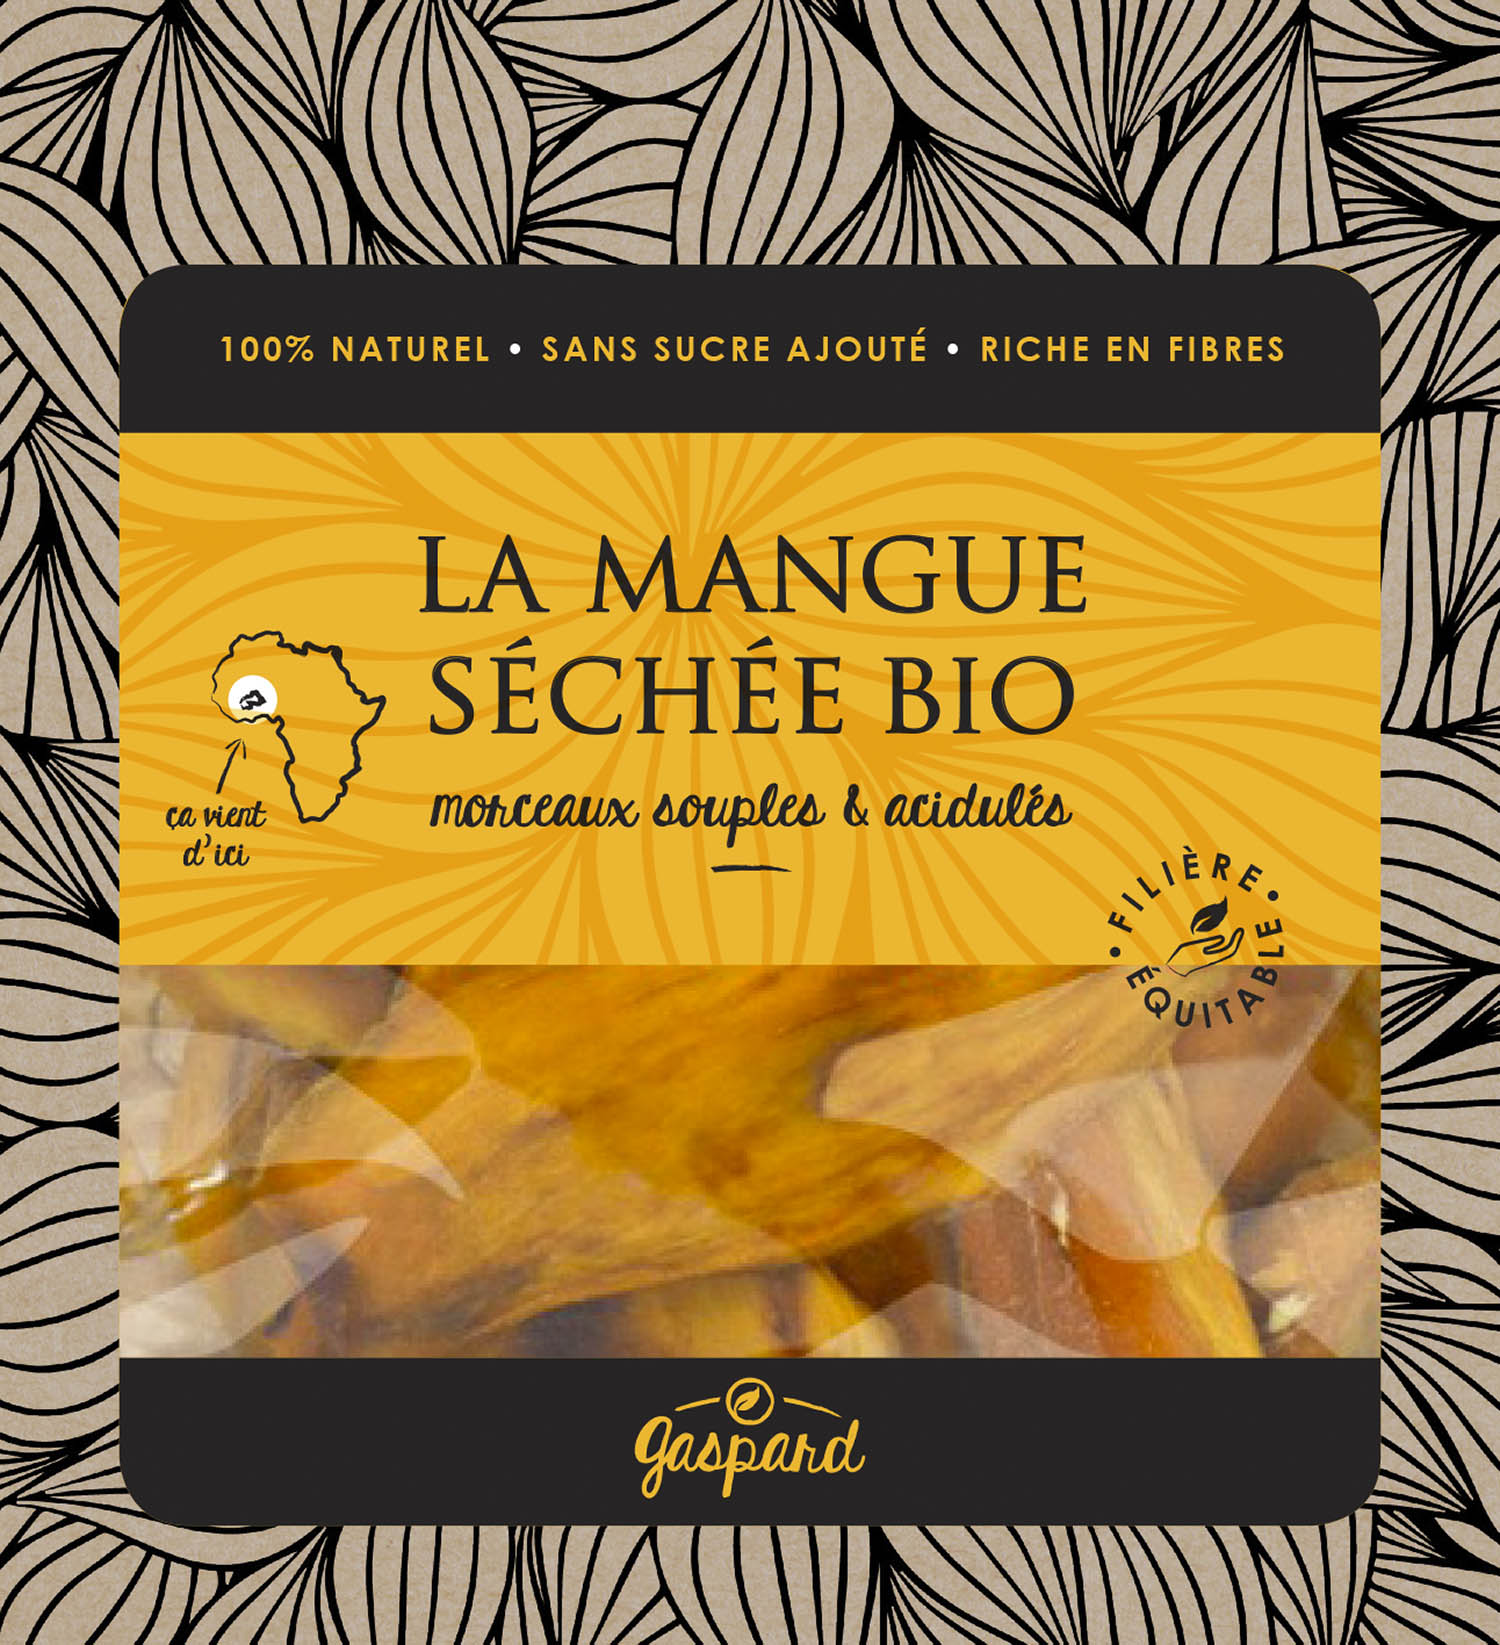 Mangue-sechee-bio-morceaux